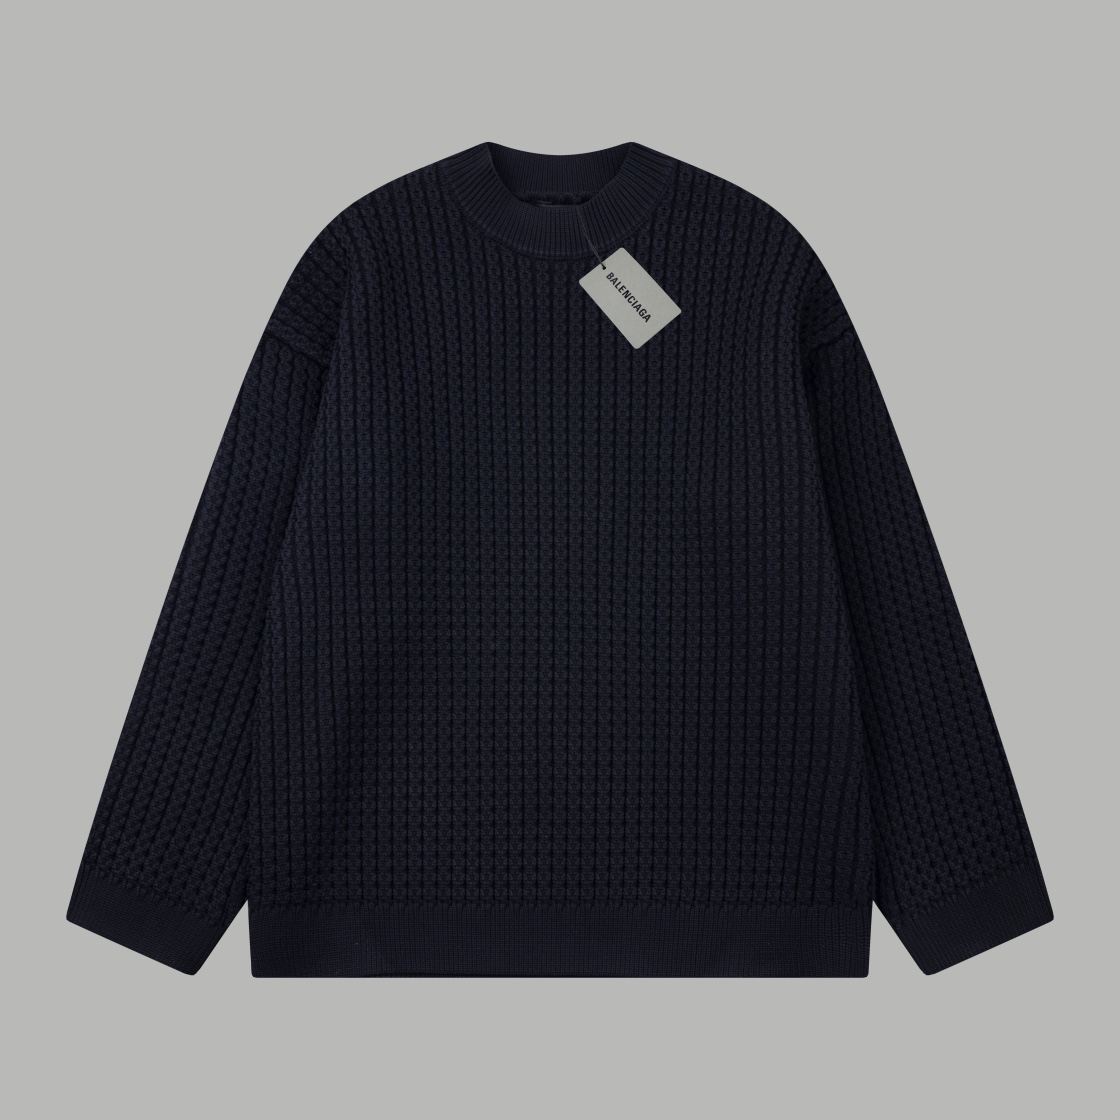 Clothing Knit Sweater Sweatshirts Best Quality Replica Unisex Knitting